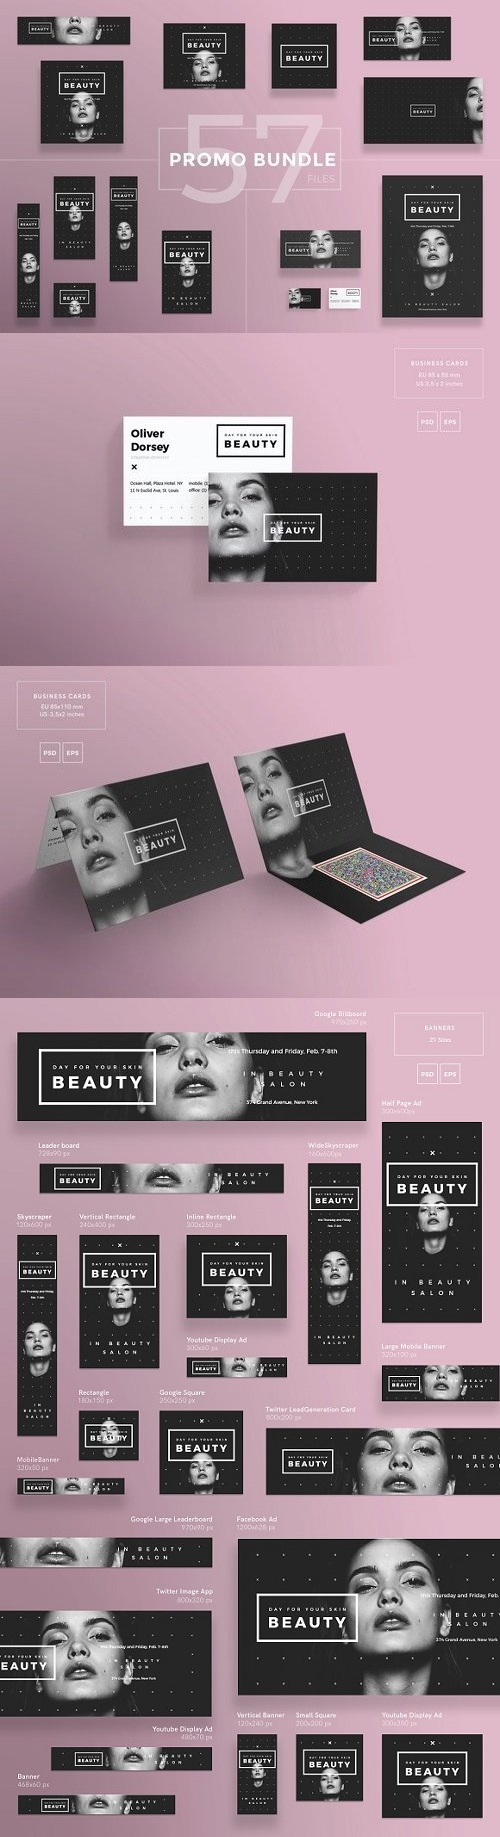 Promo Bundle | Your Skin Beauty 1466468